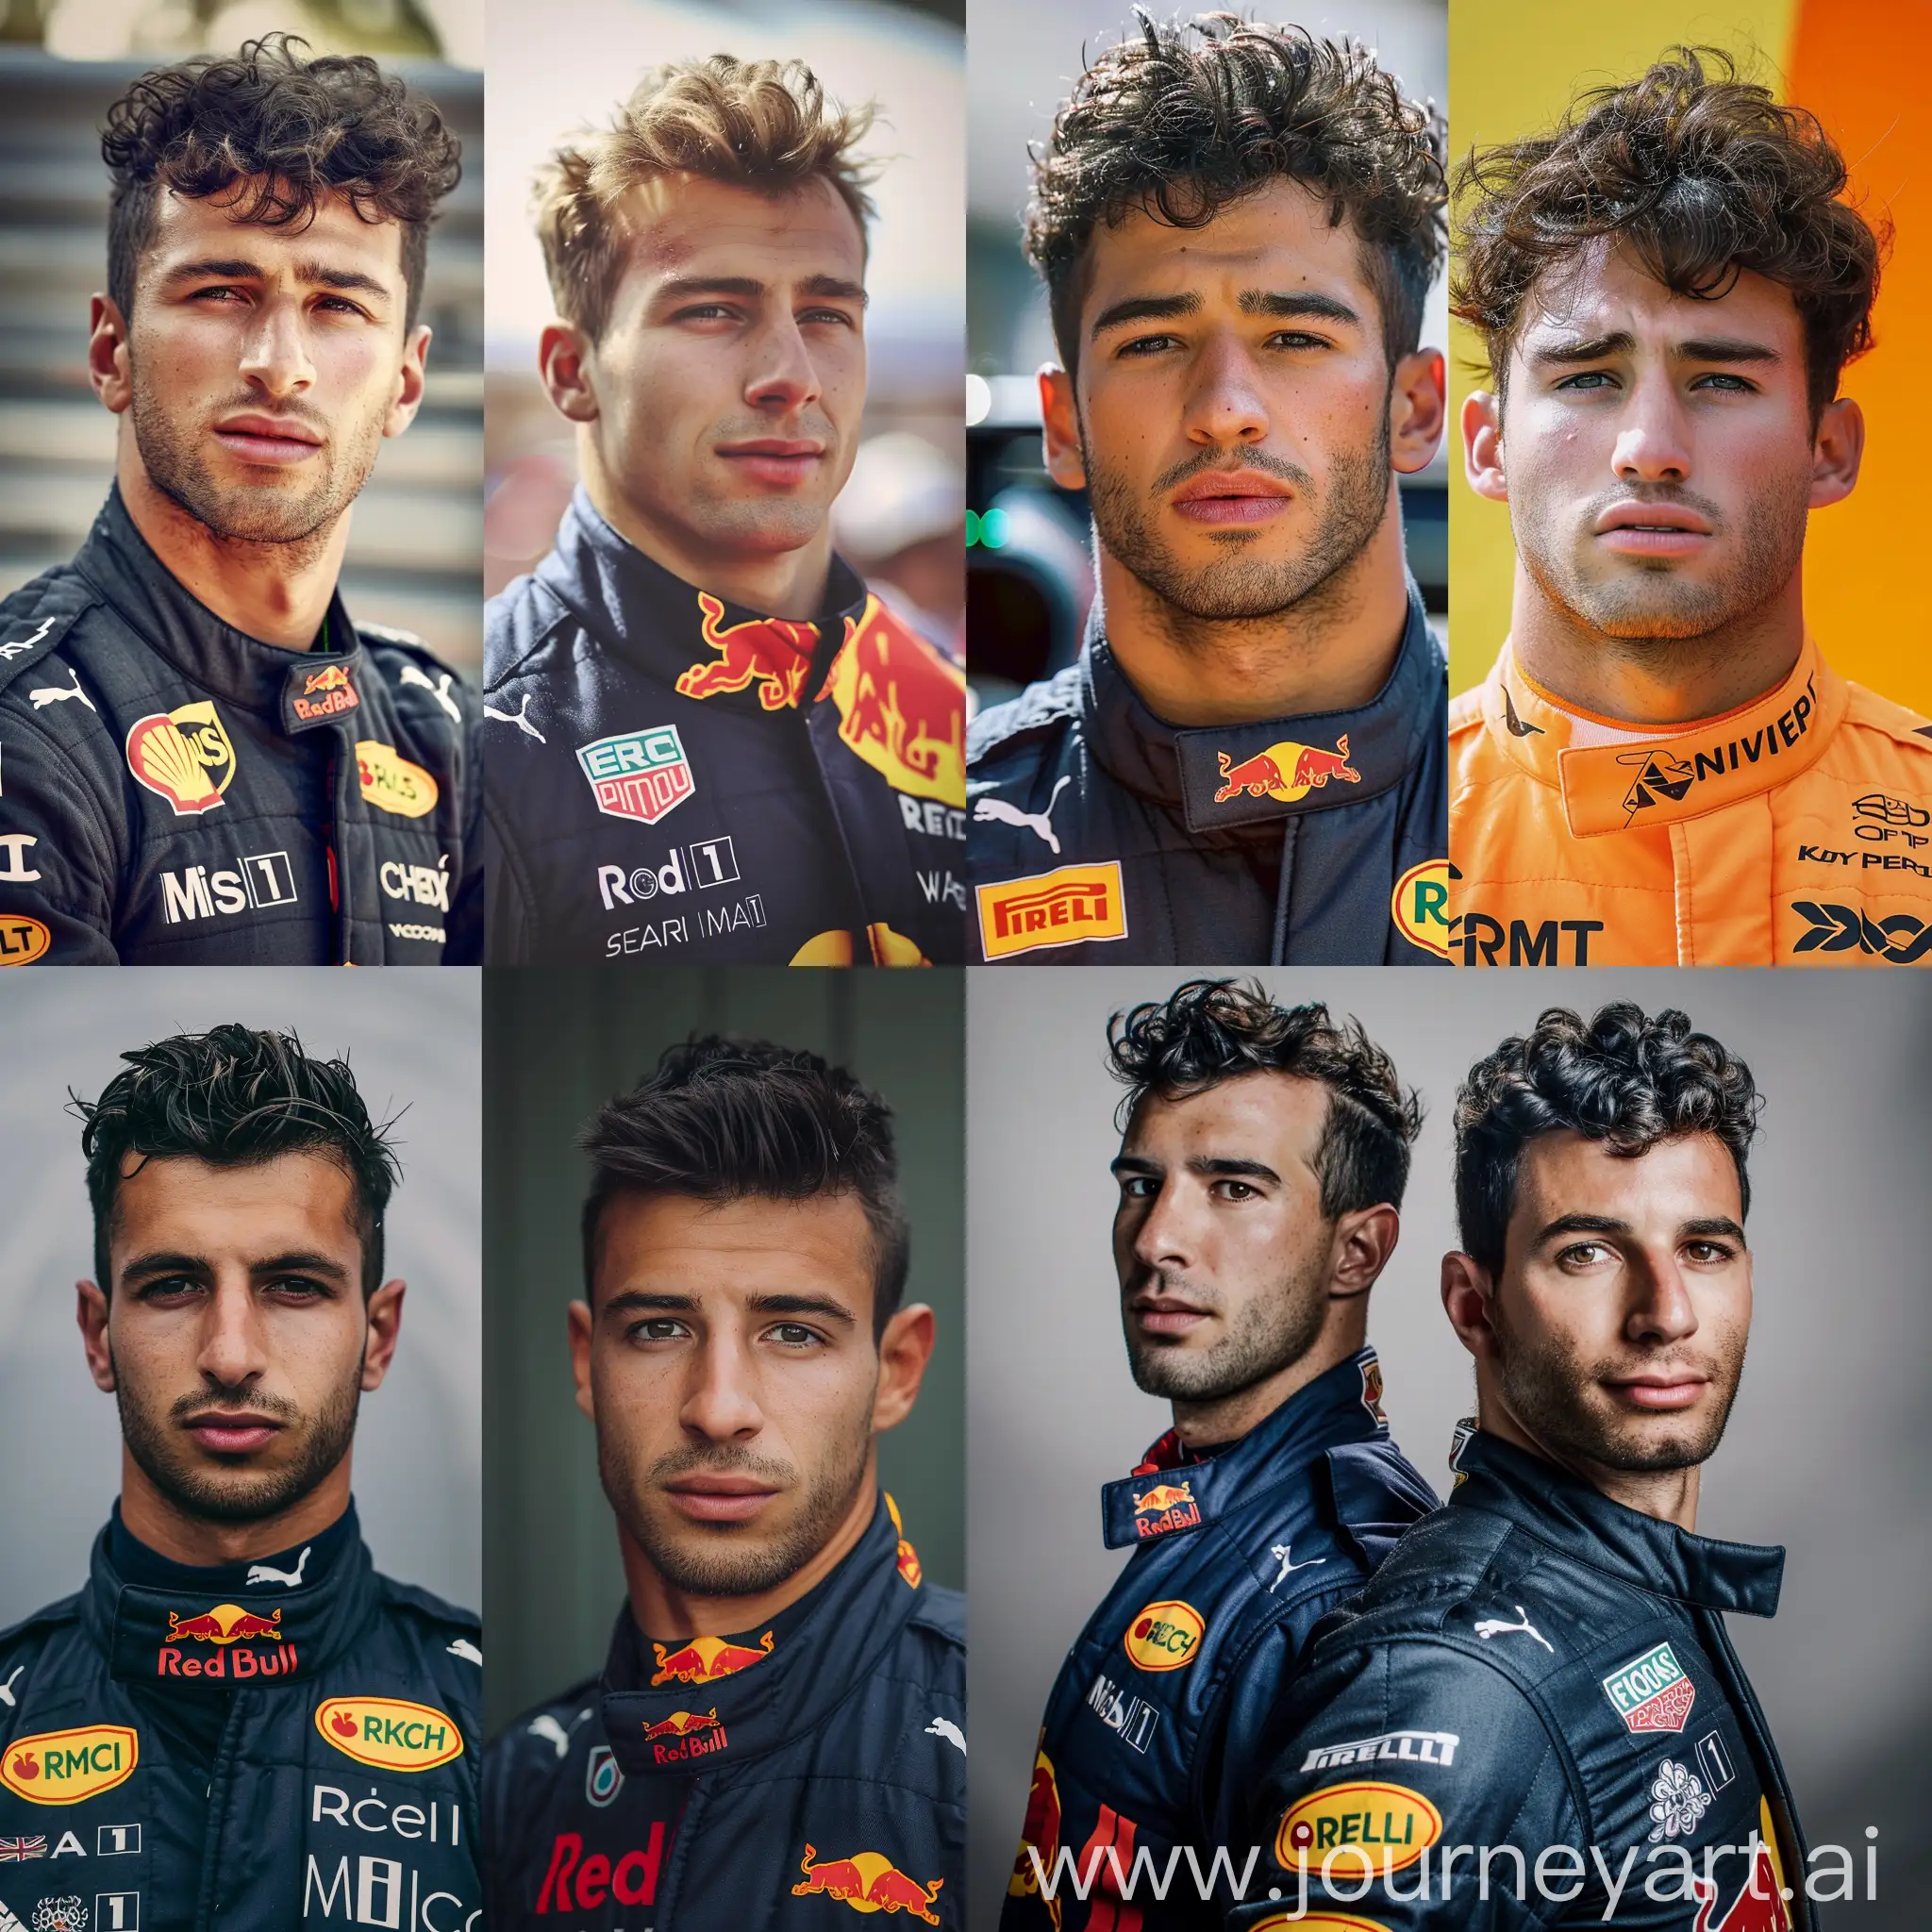 Imagine what the adult son of Daniel Ricciardo and Daniil Kvyat would look like.